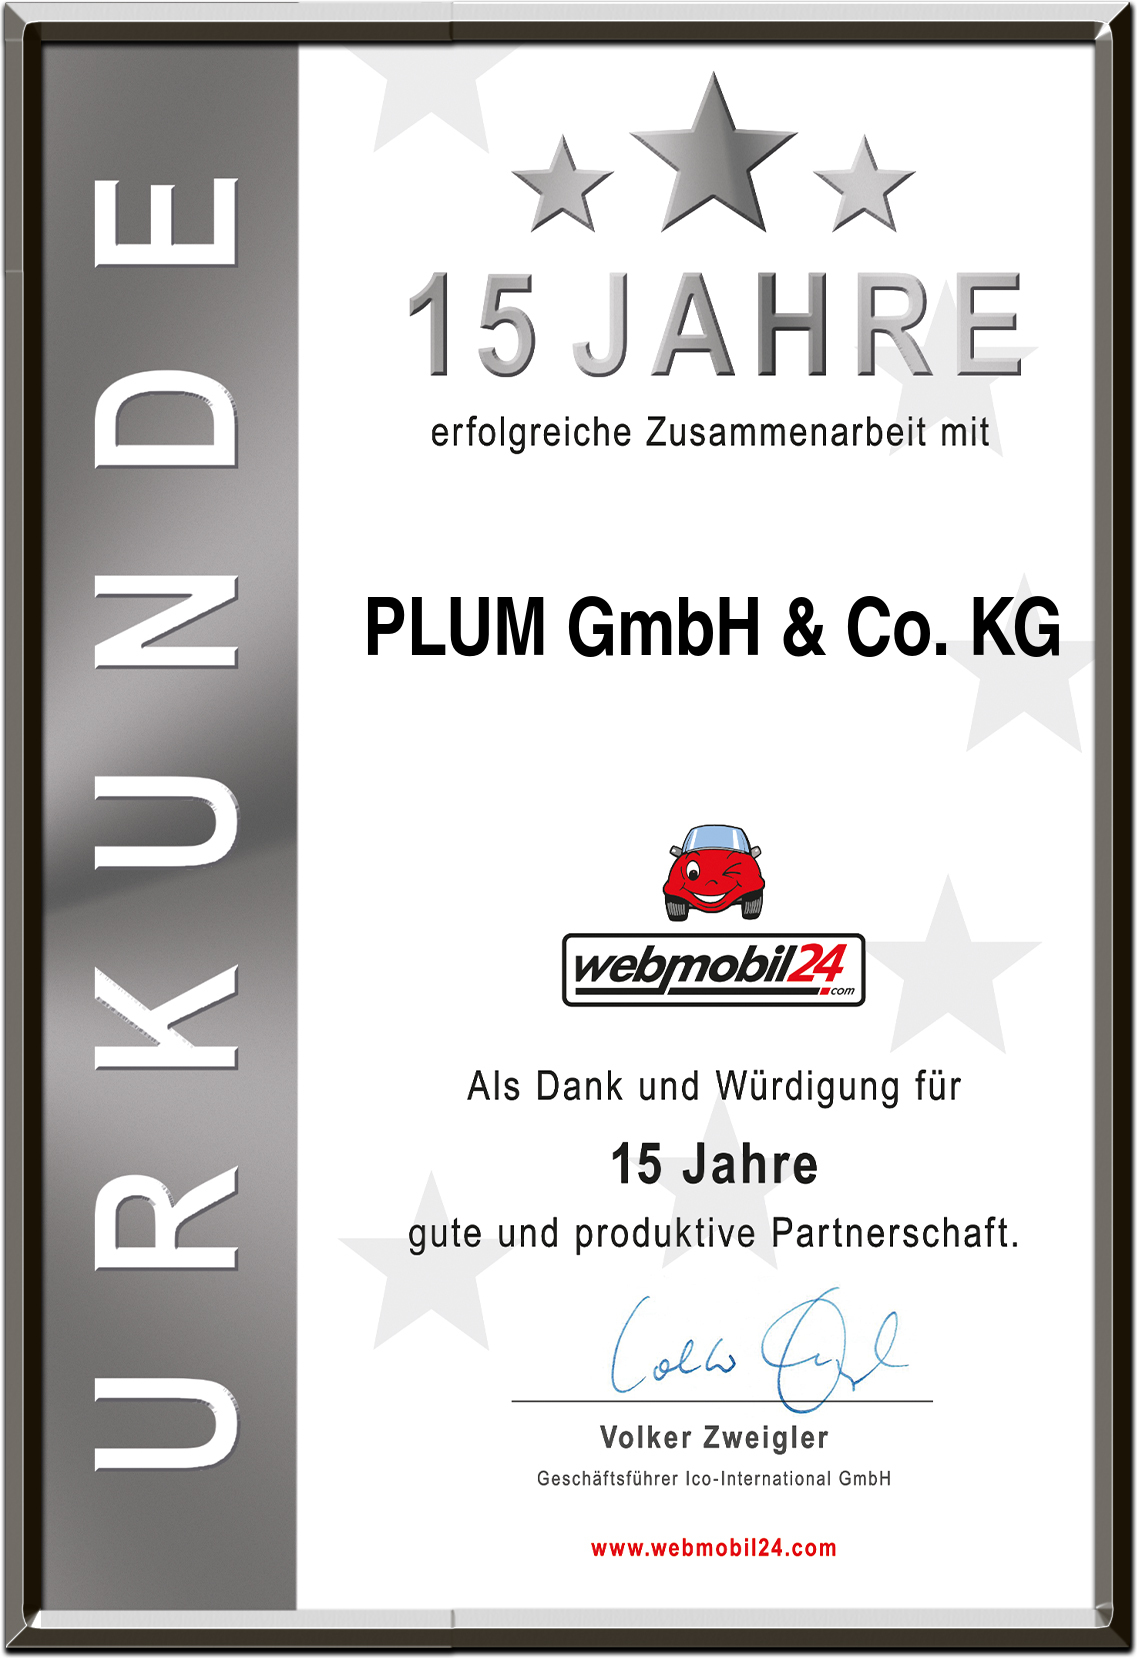 PLUM GmbH & Co. KG